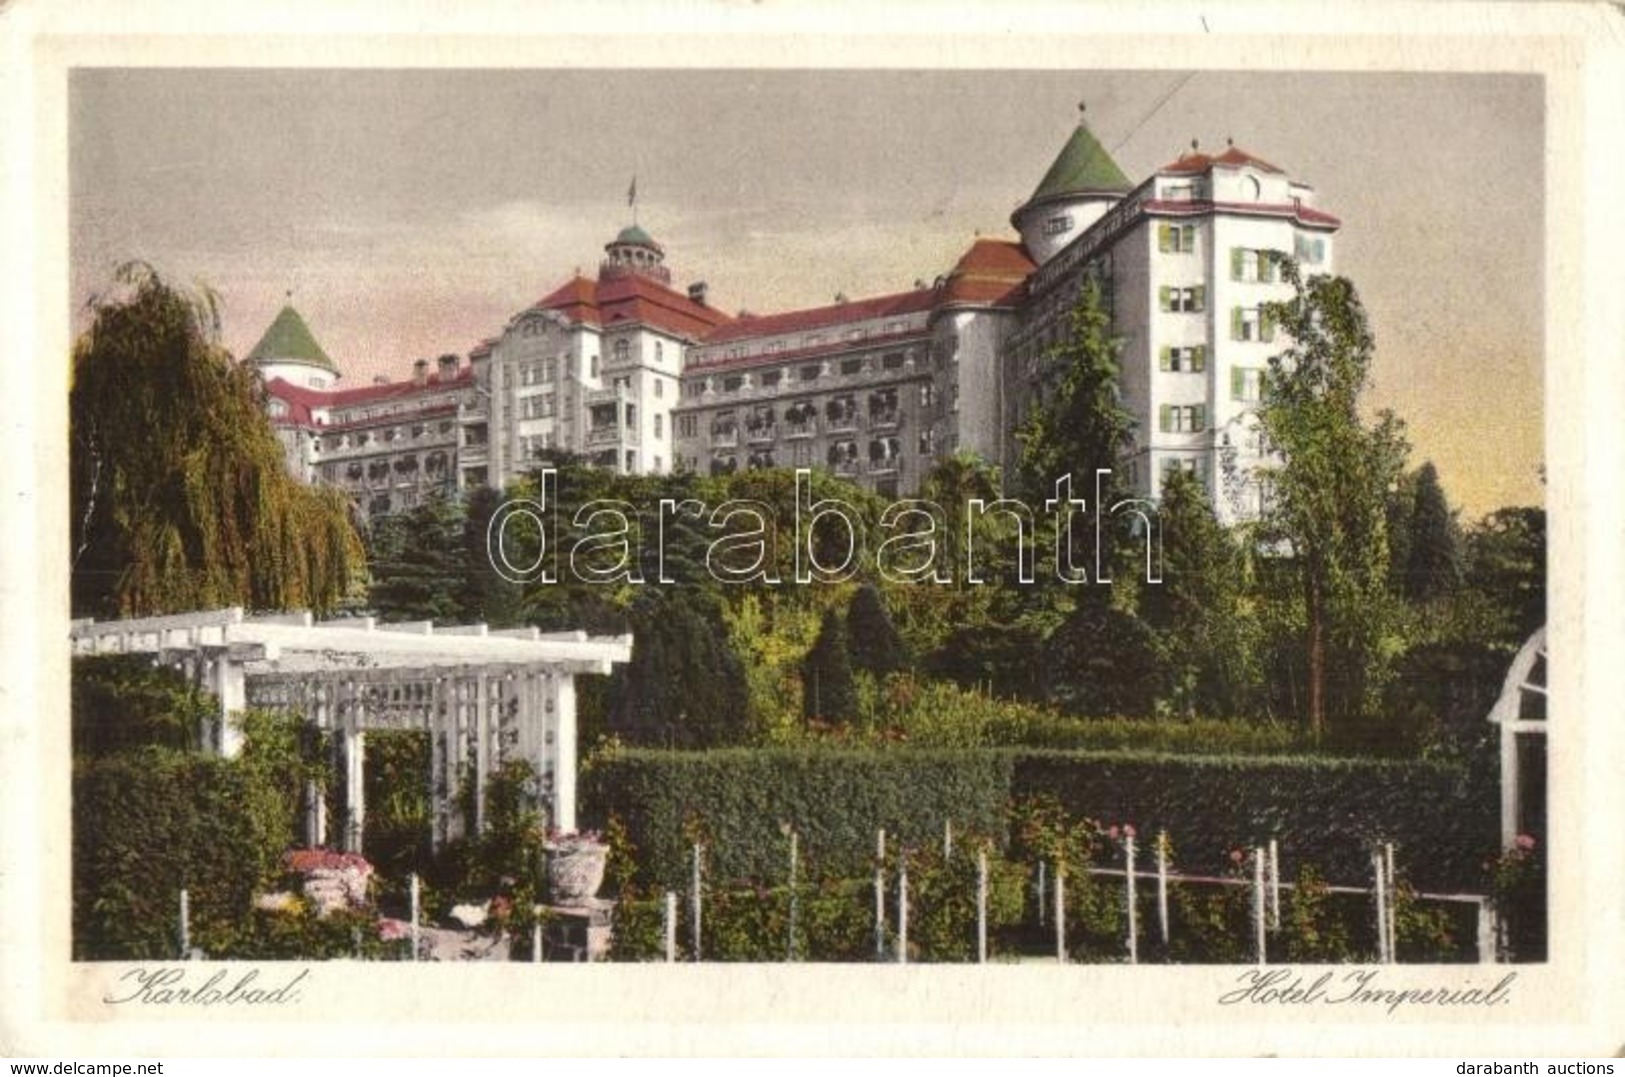 * T2 Karlovy Vary, Karlsbad; Hotel Imperial - Unclassified